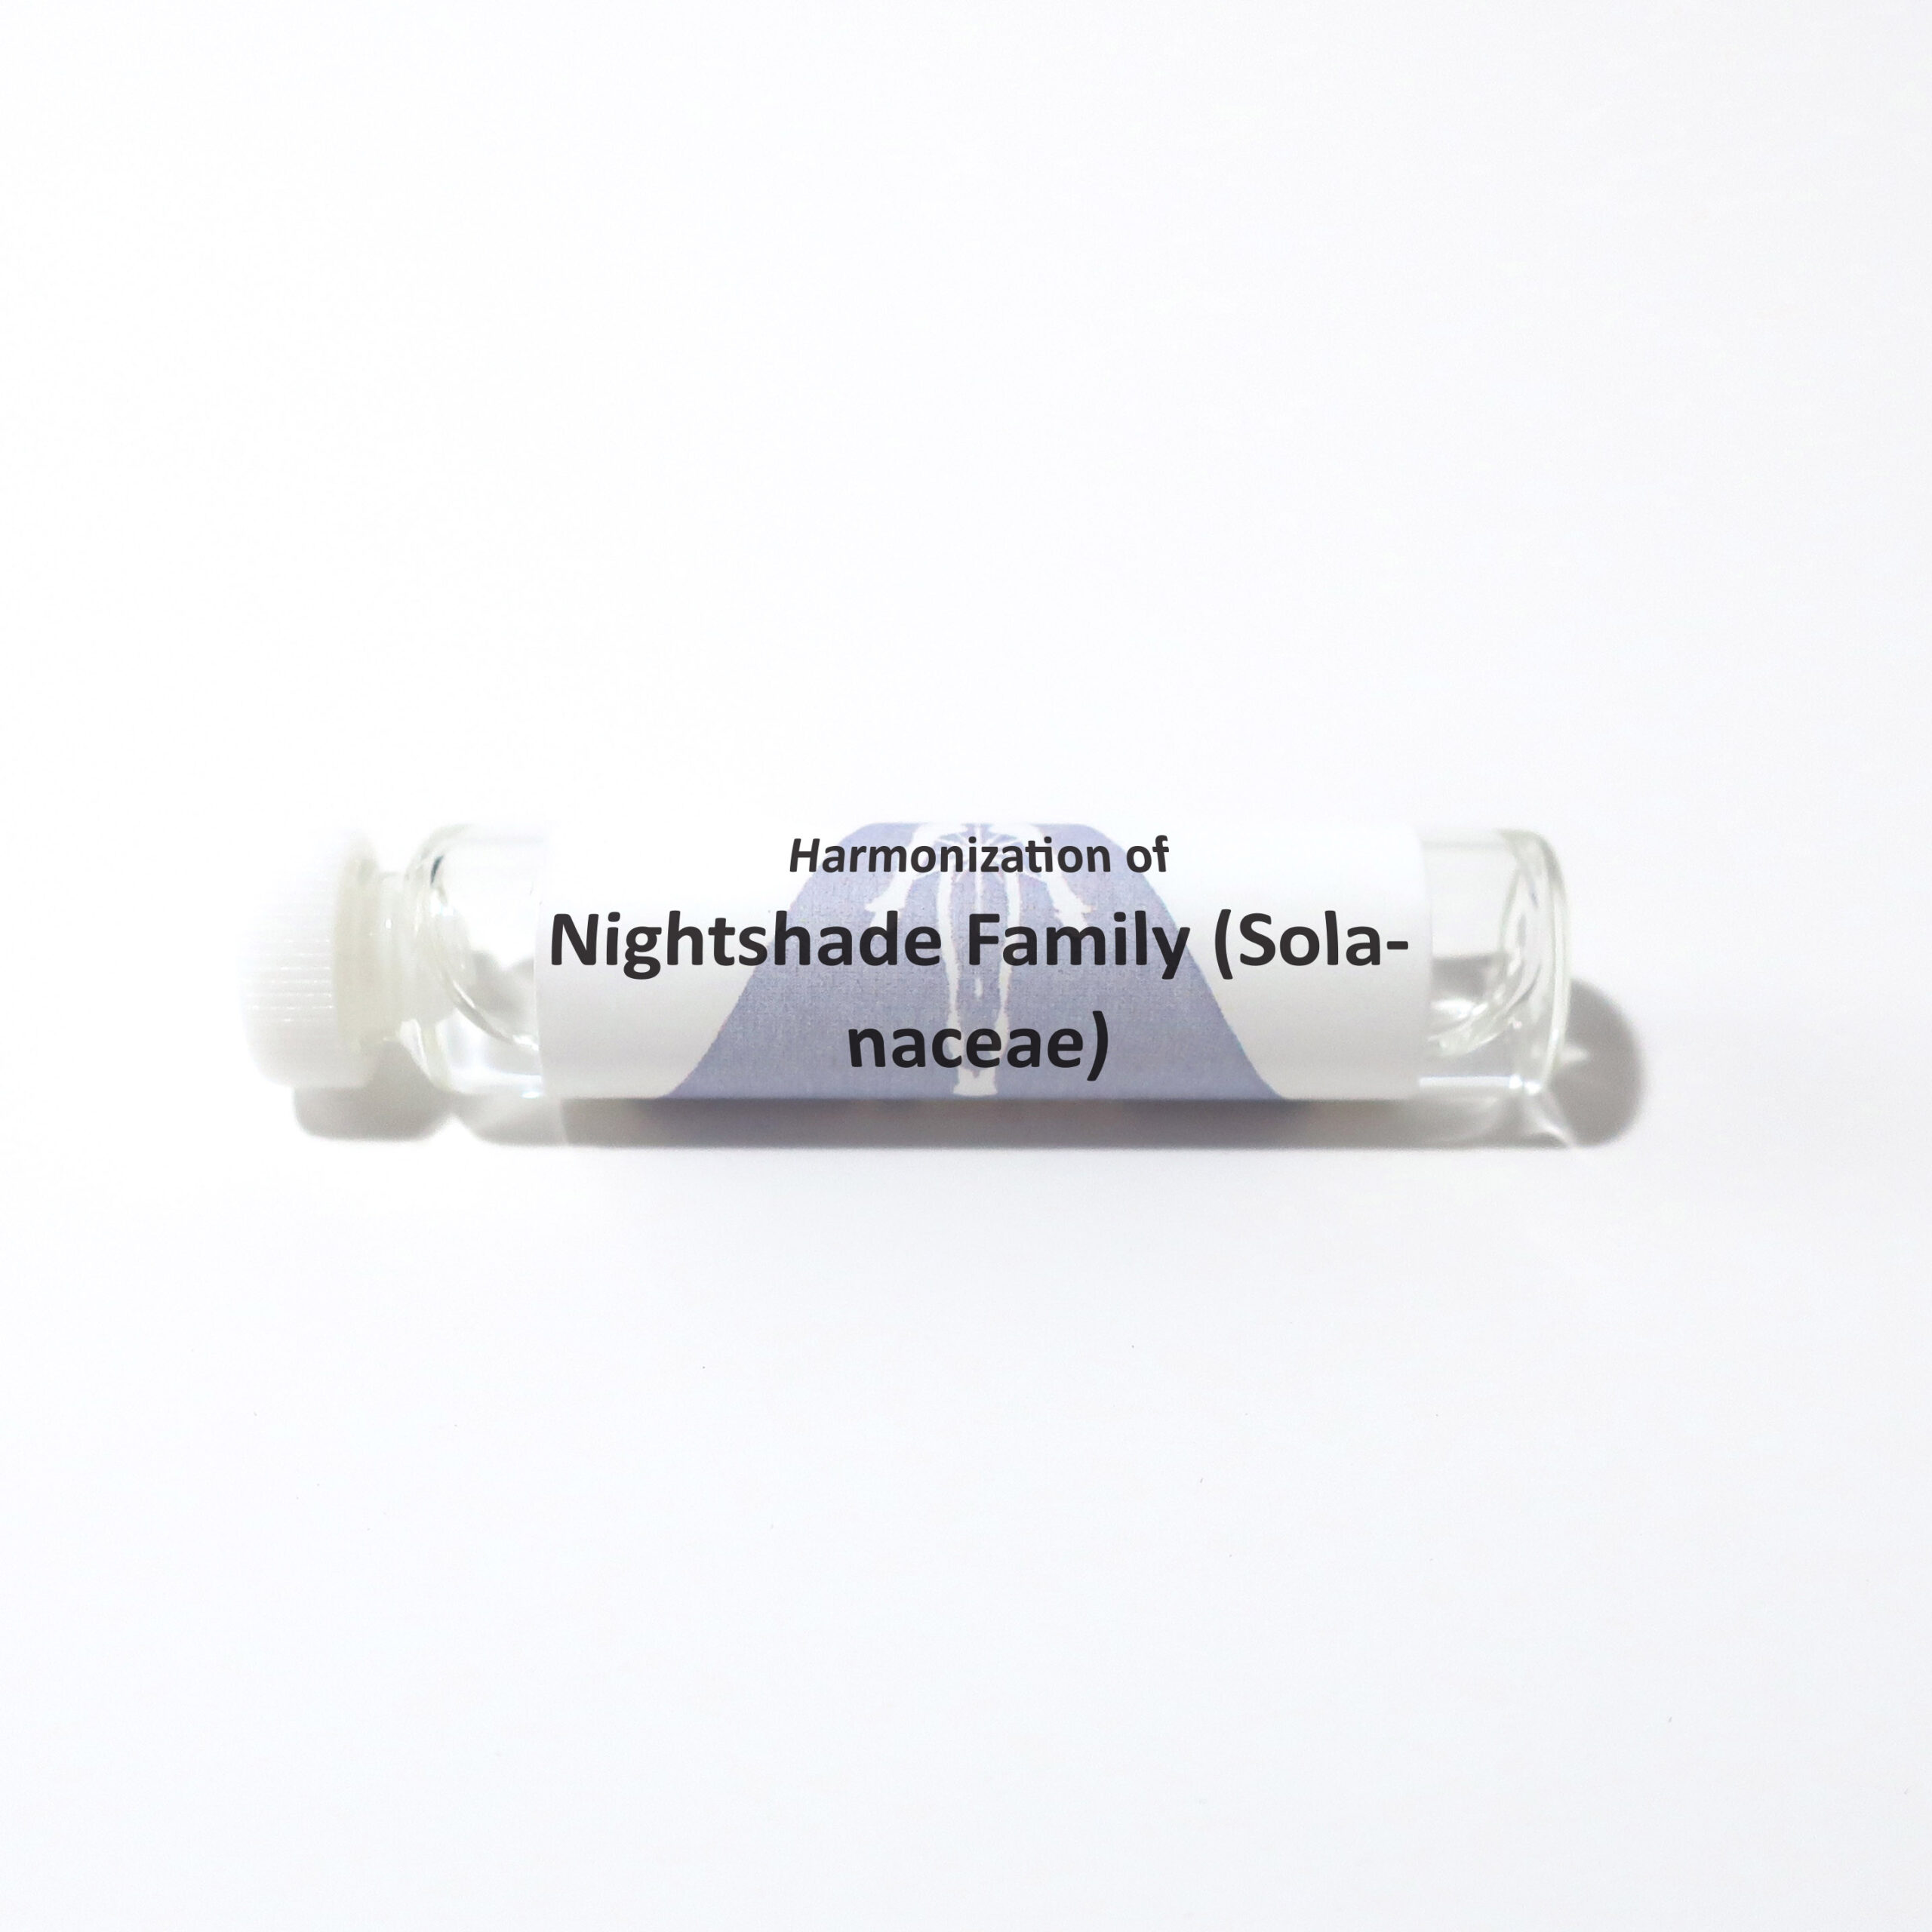 Nightshade Family (Solanaceae)